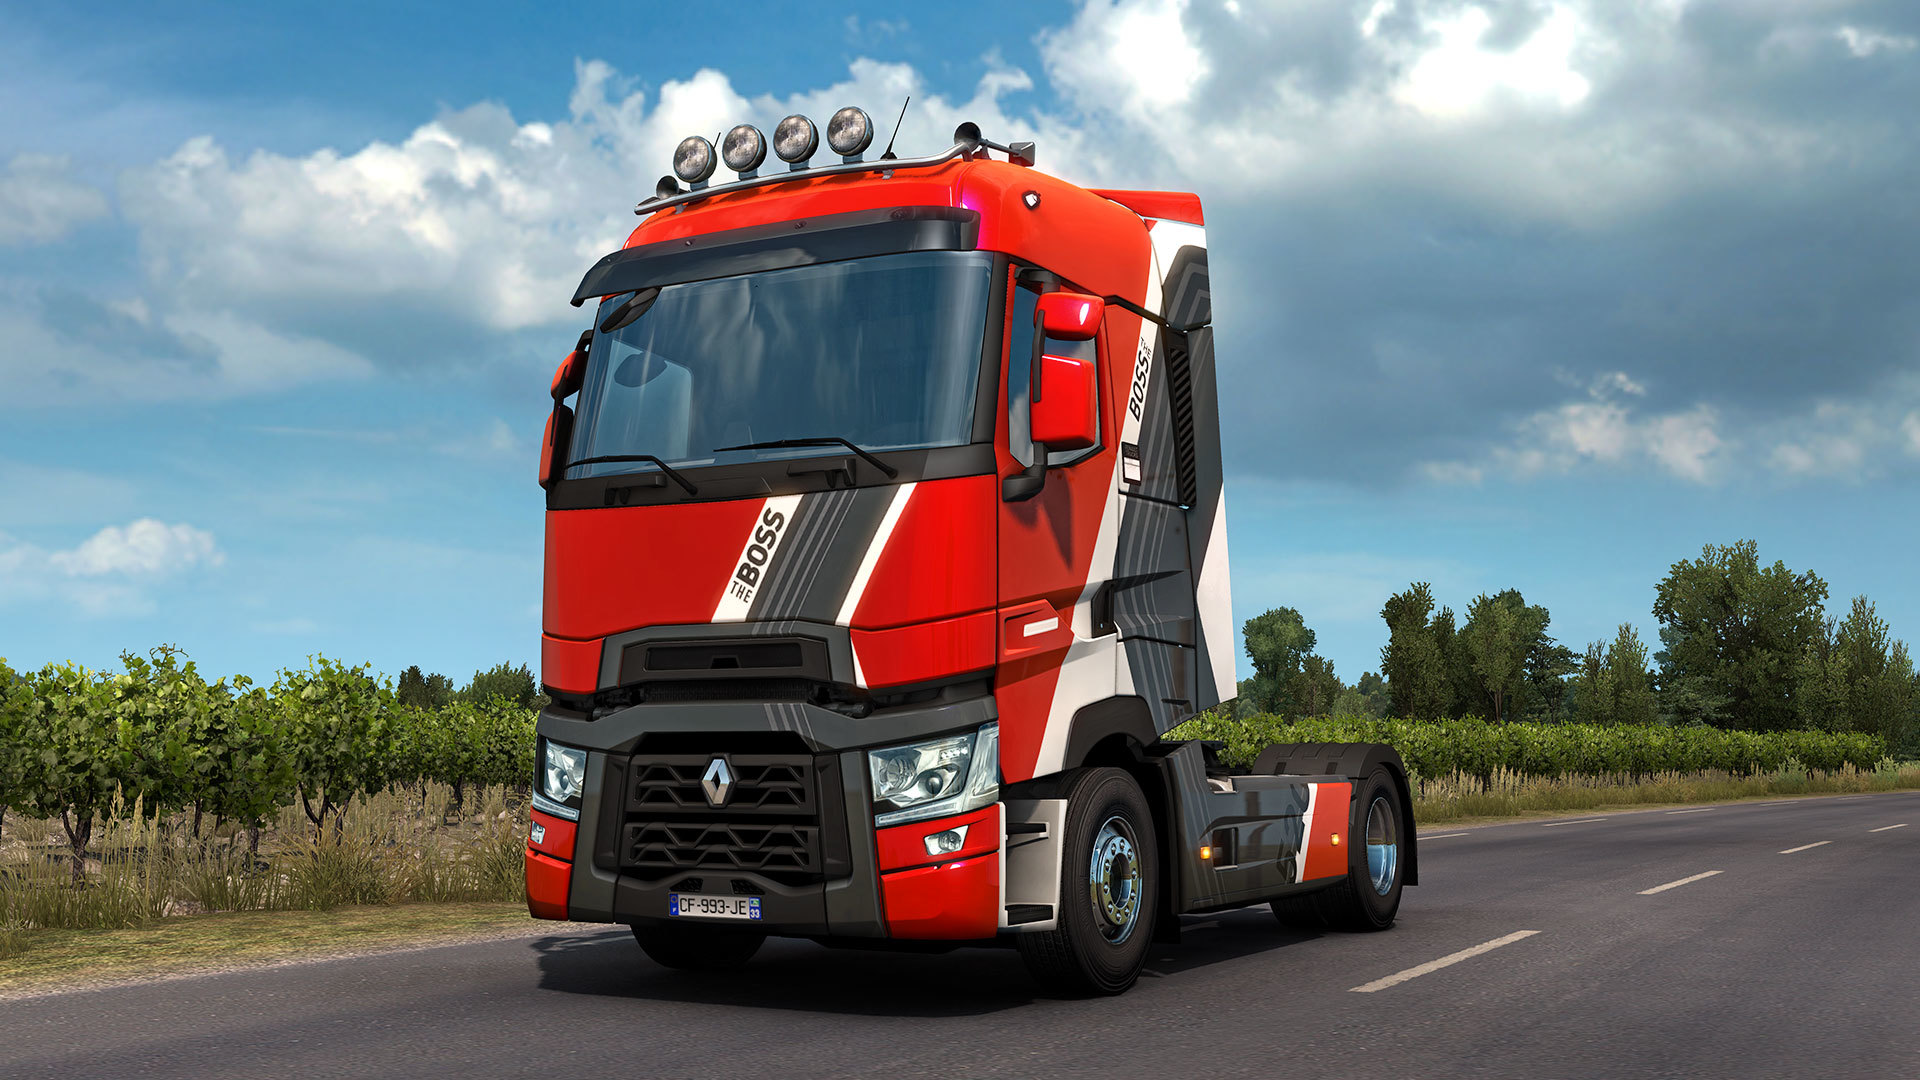 Steam Euro Truck Simulator 2 Imtheboss Contest